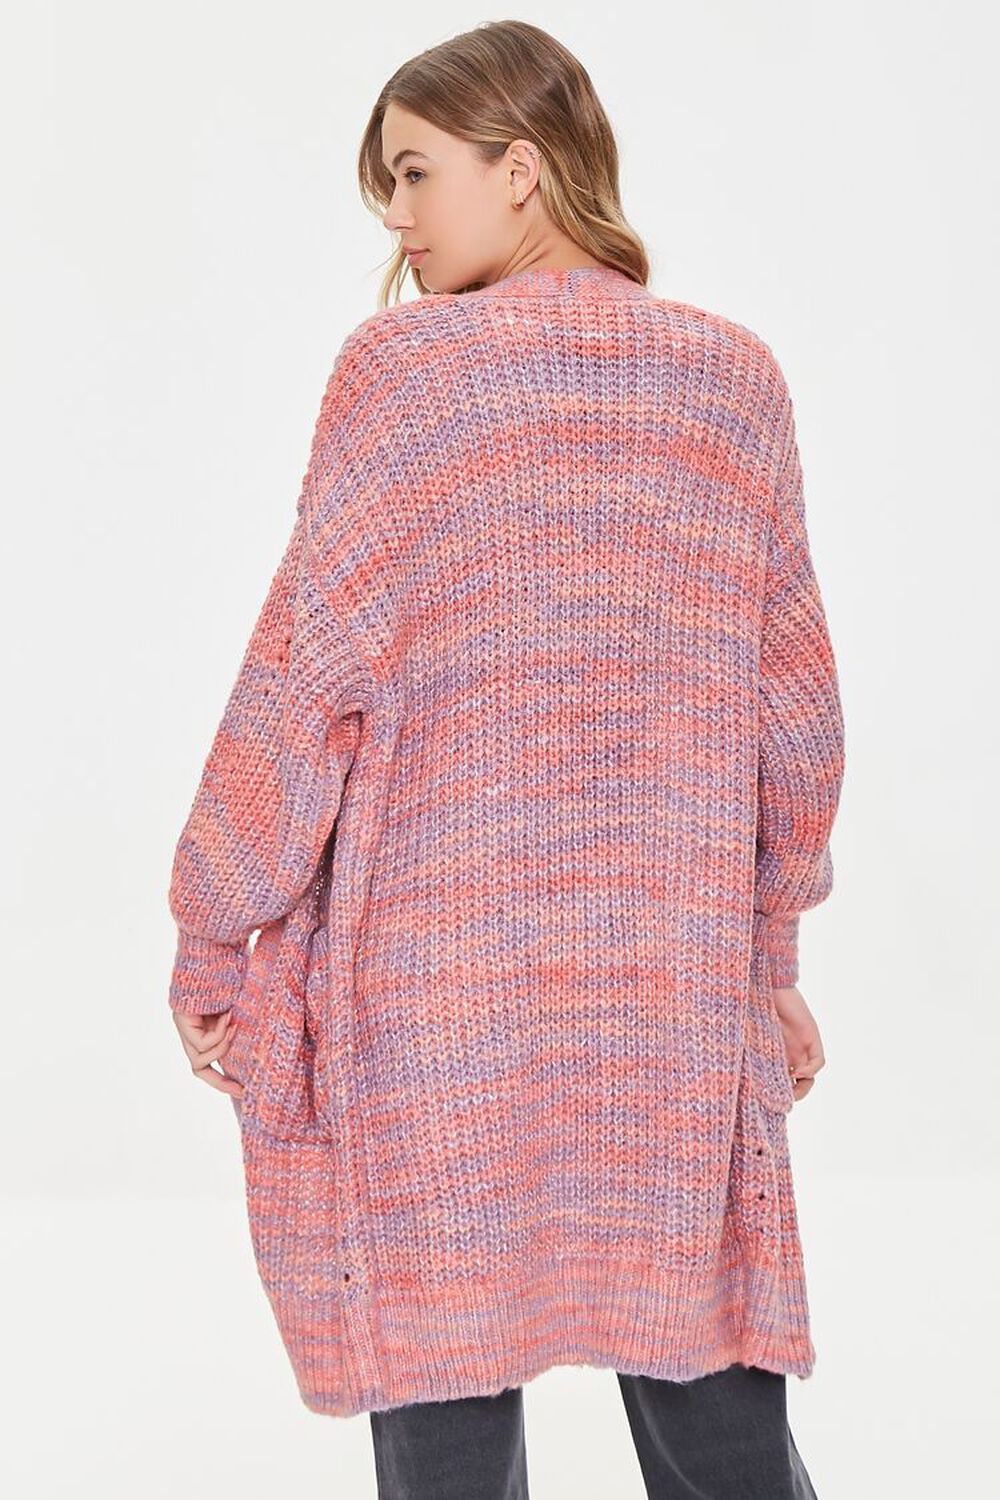 RUST/MULTI Space Dye Longline Cardigan Sweater, image 3